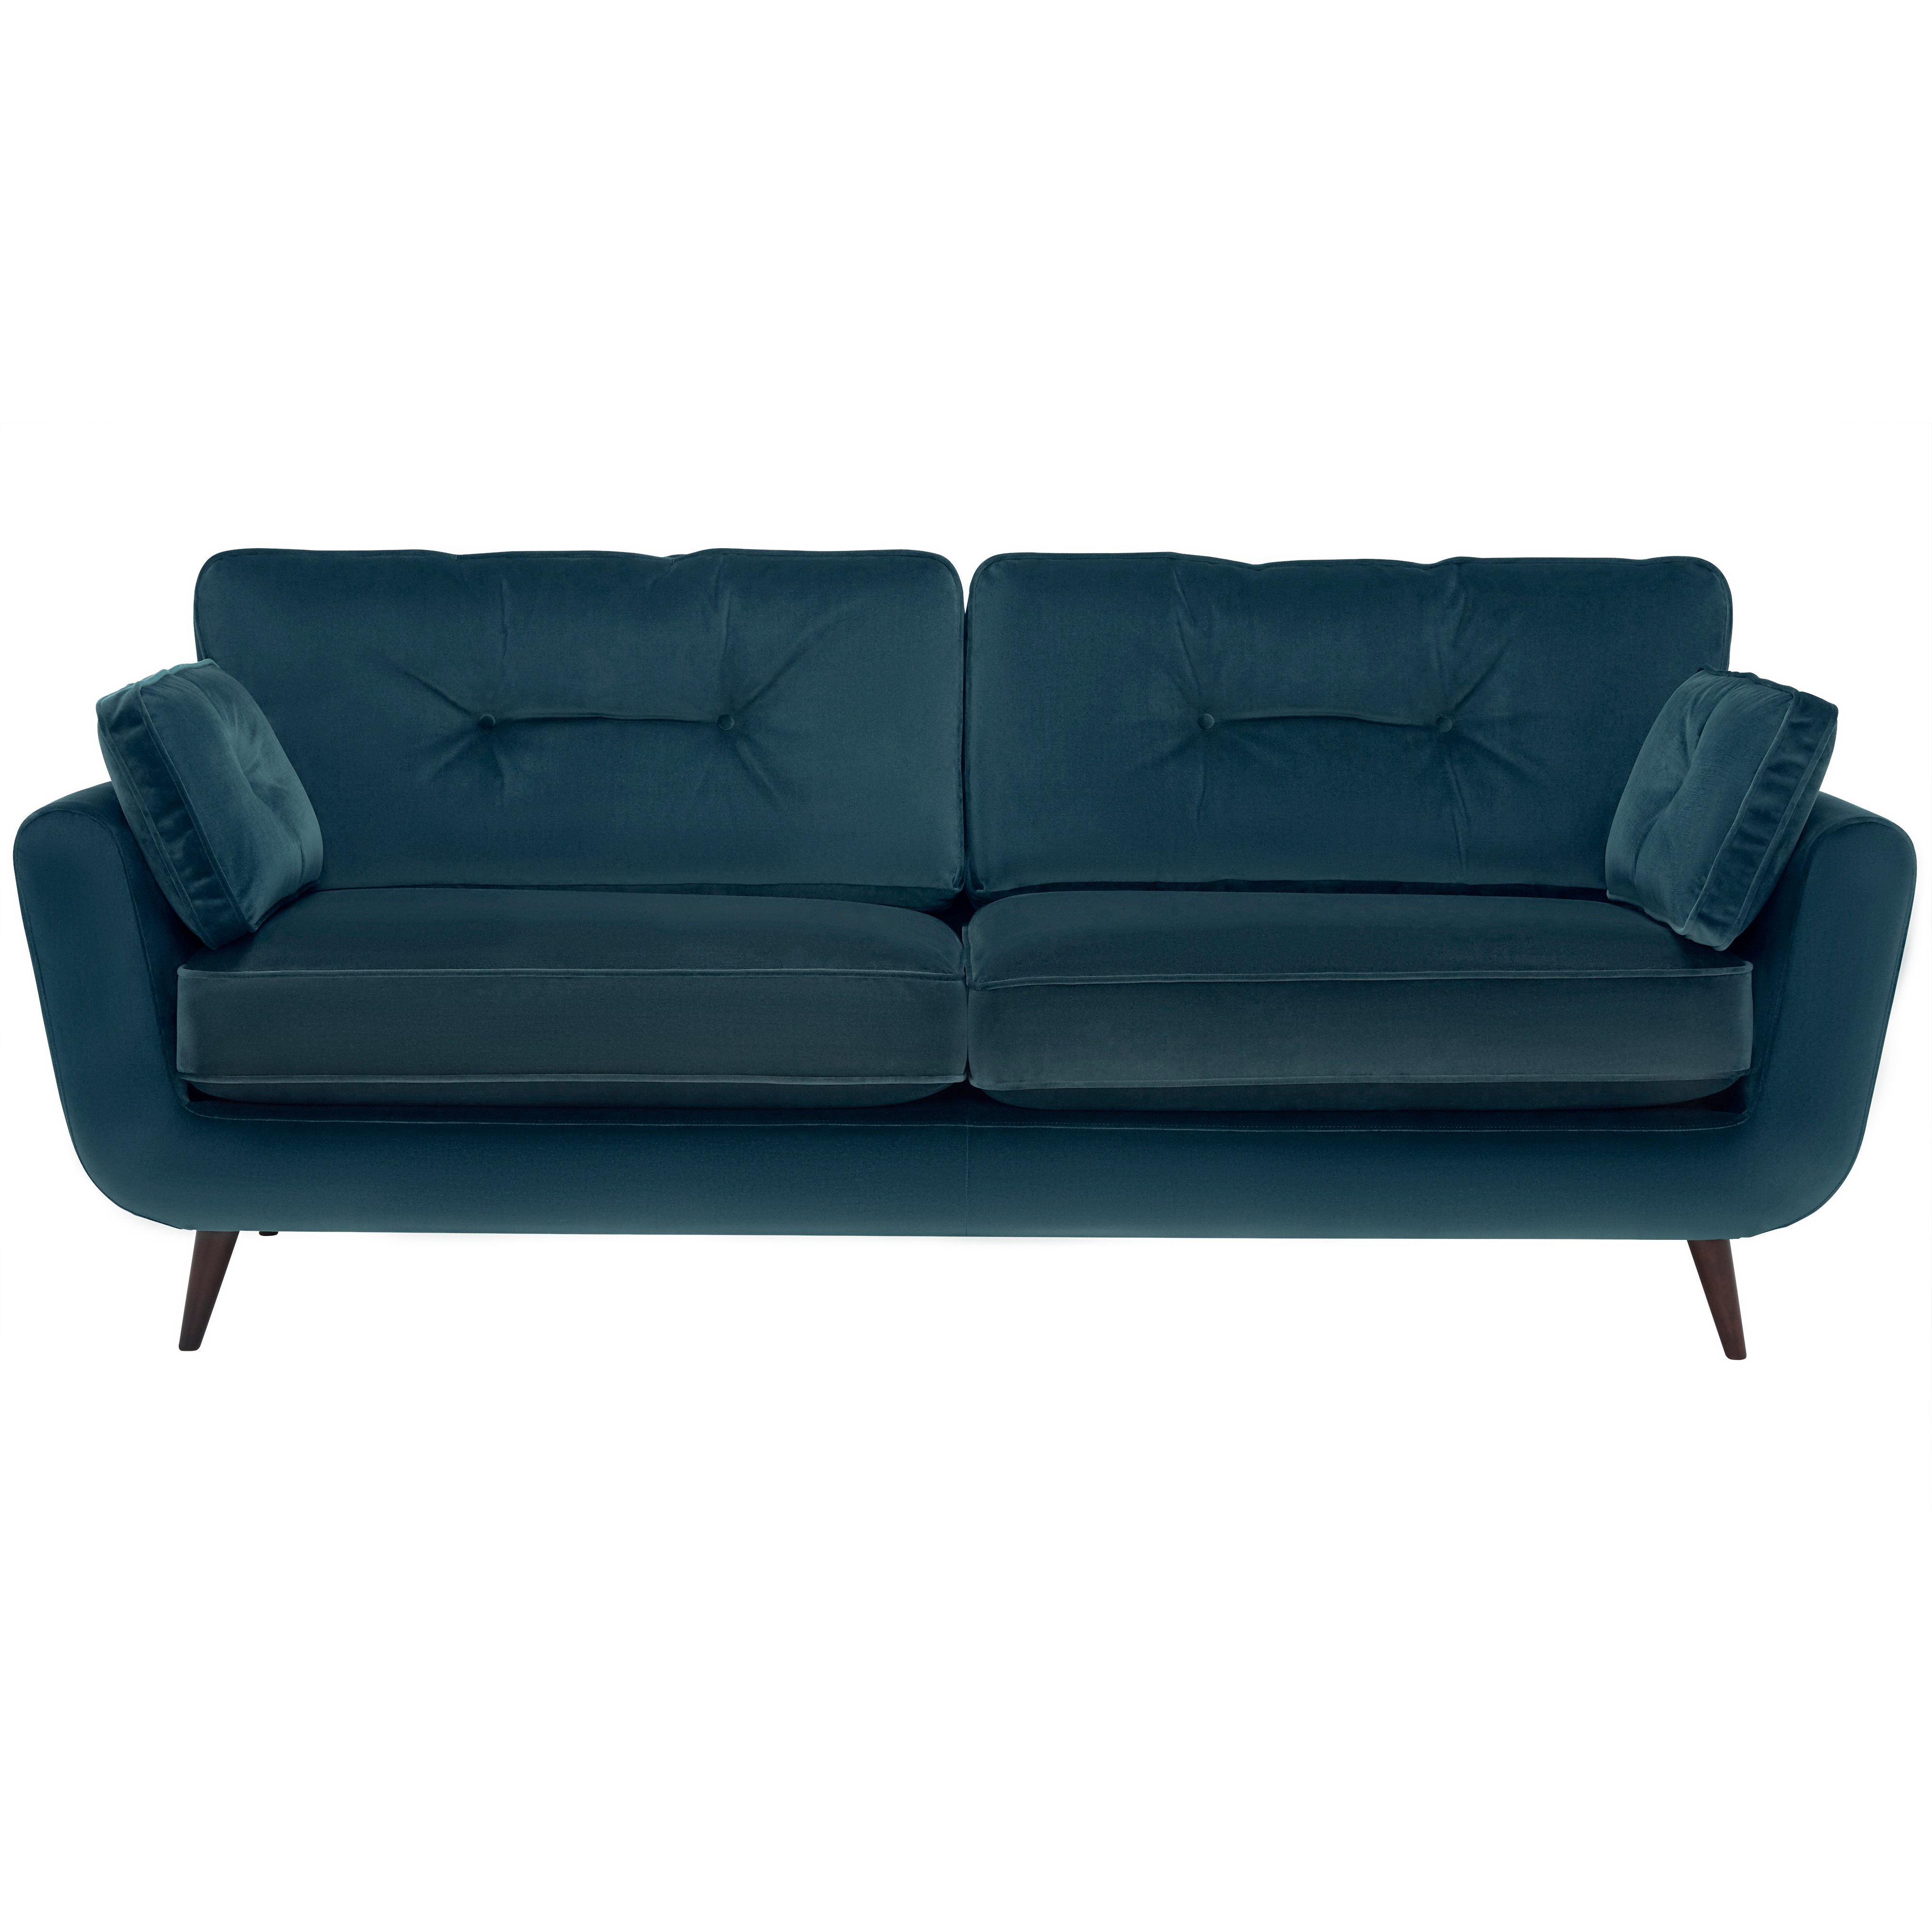 Lotus Large Sofa, Blue Fabric | Barker & Stonehouse